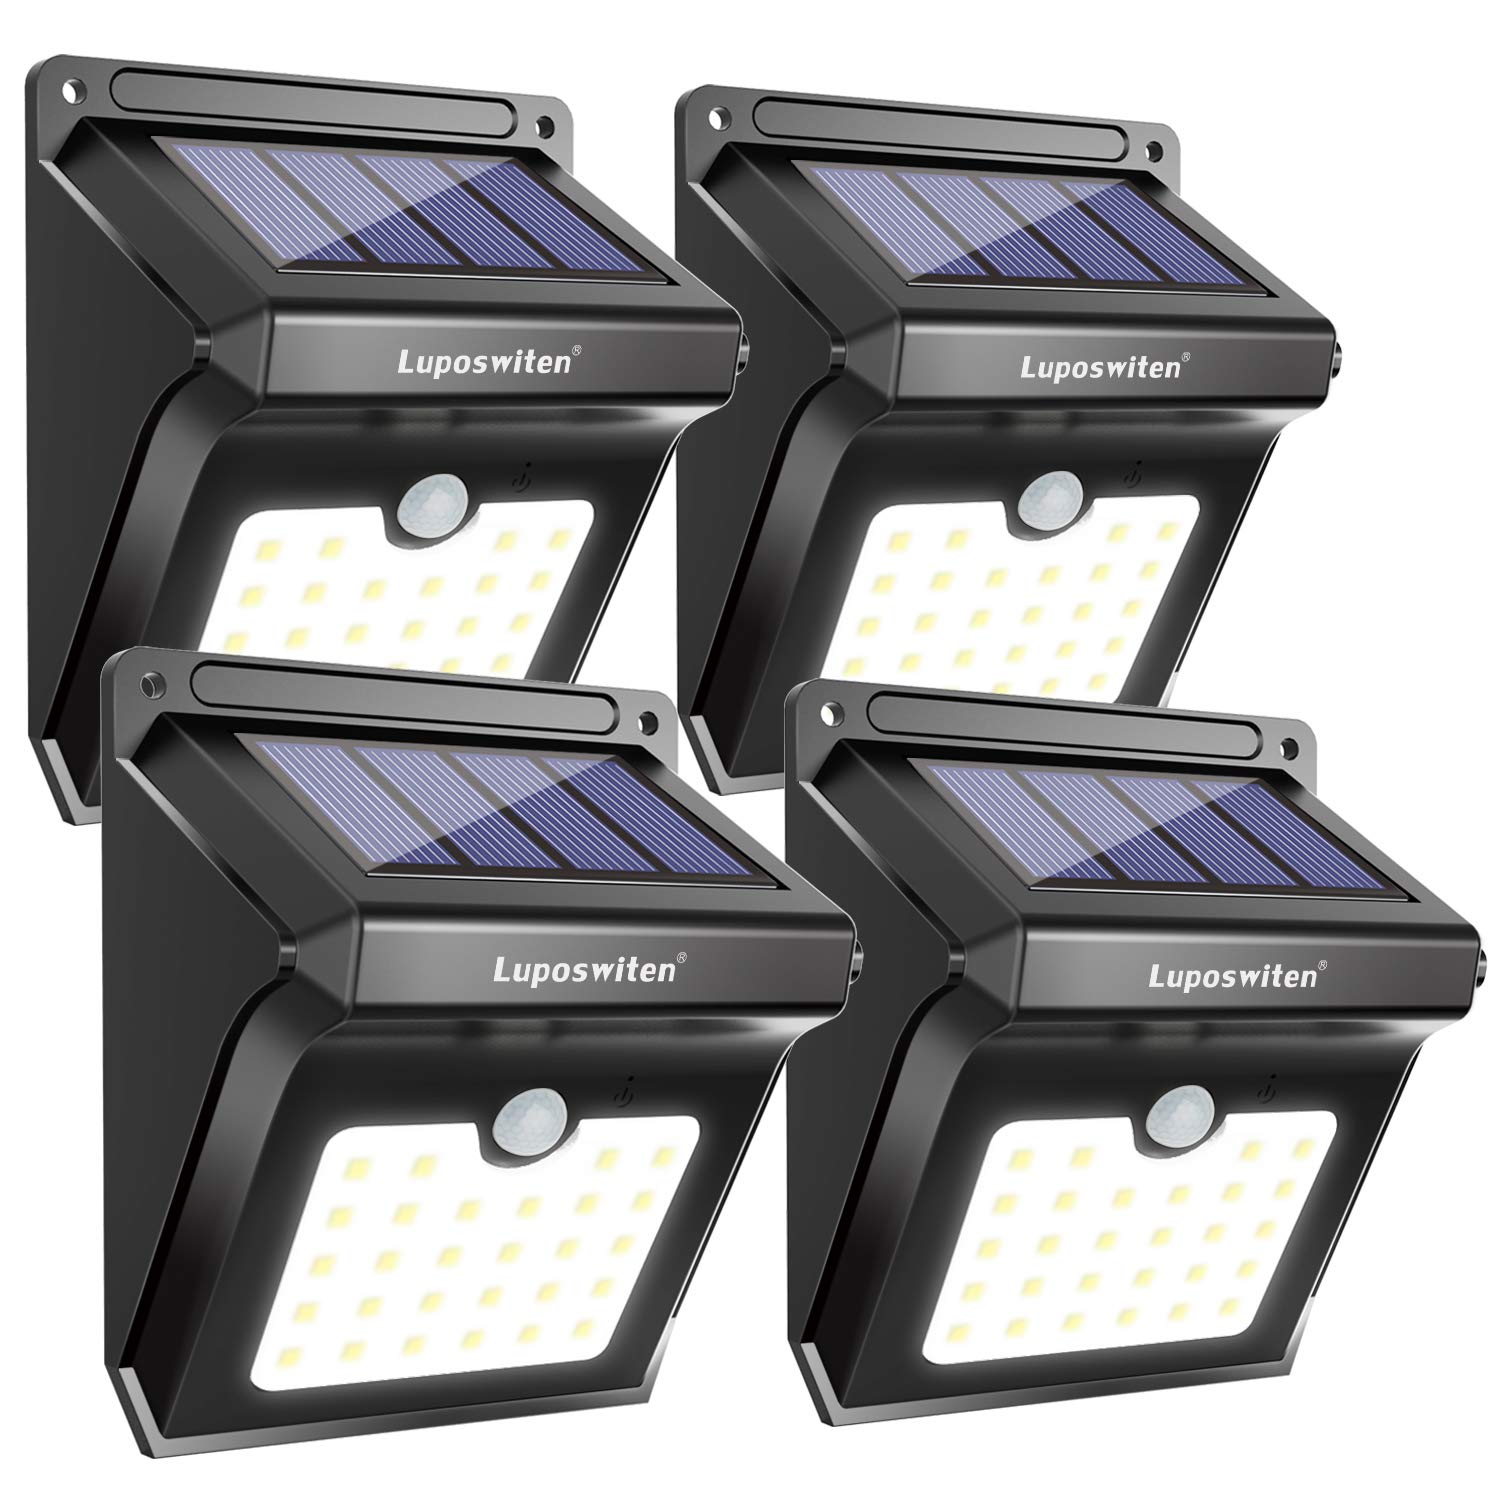 4-pack 28 LED solar outdoor motion lights for $14